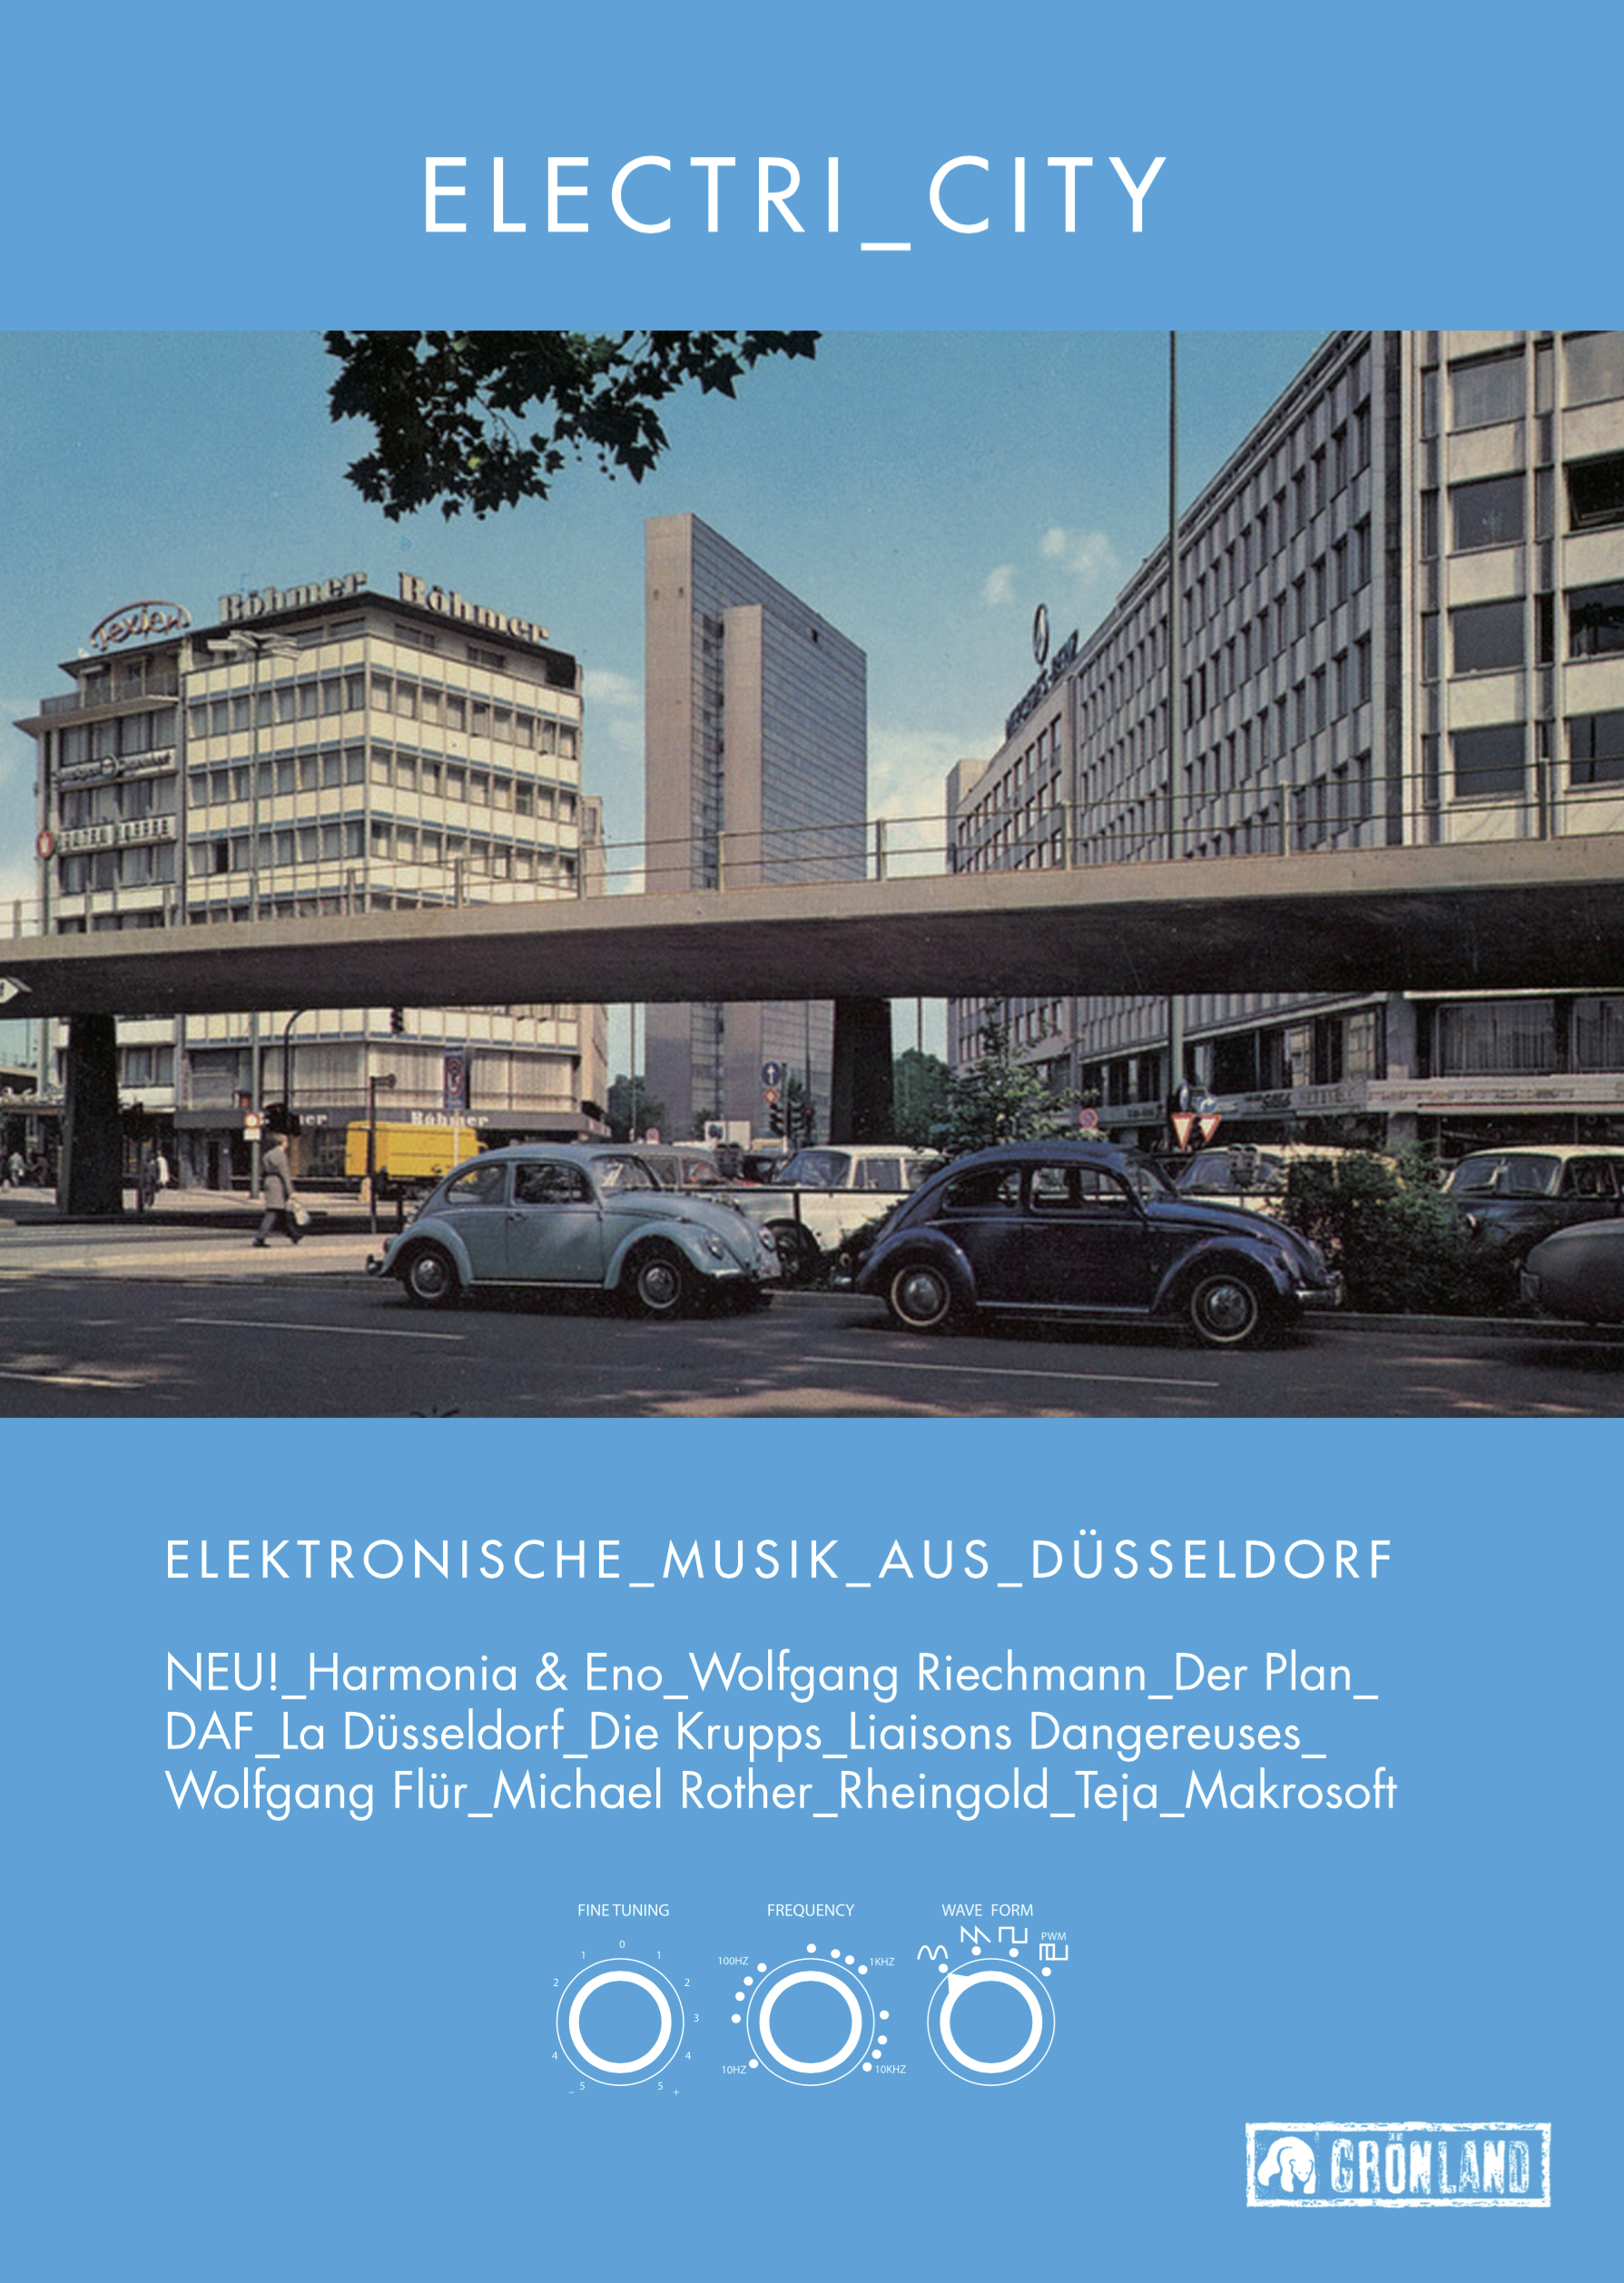 Electri_City, Electricity, Electri_City, Düsseldorf, düsseldorf, DAF, Conny Plank, Kraftwerk